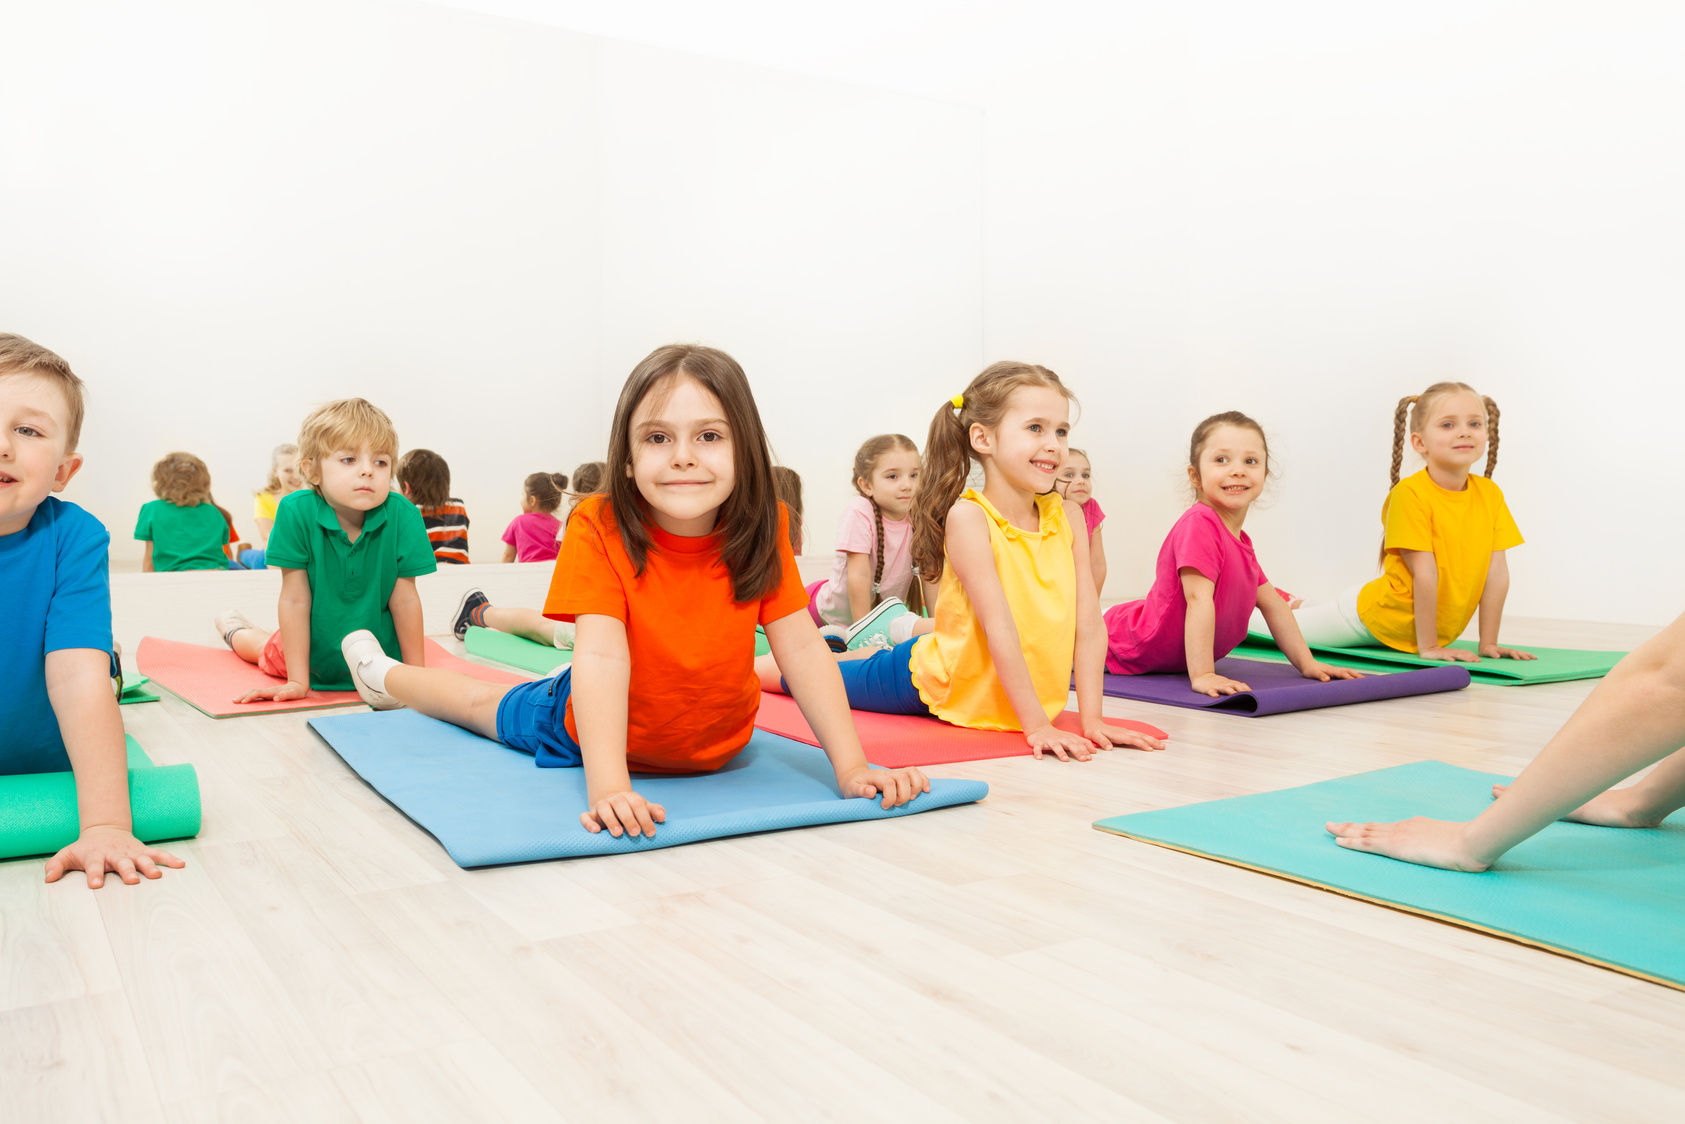 Kids Stretching Backs on Yoga Mats 